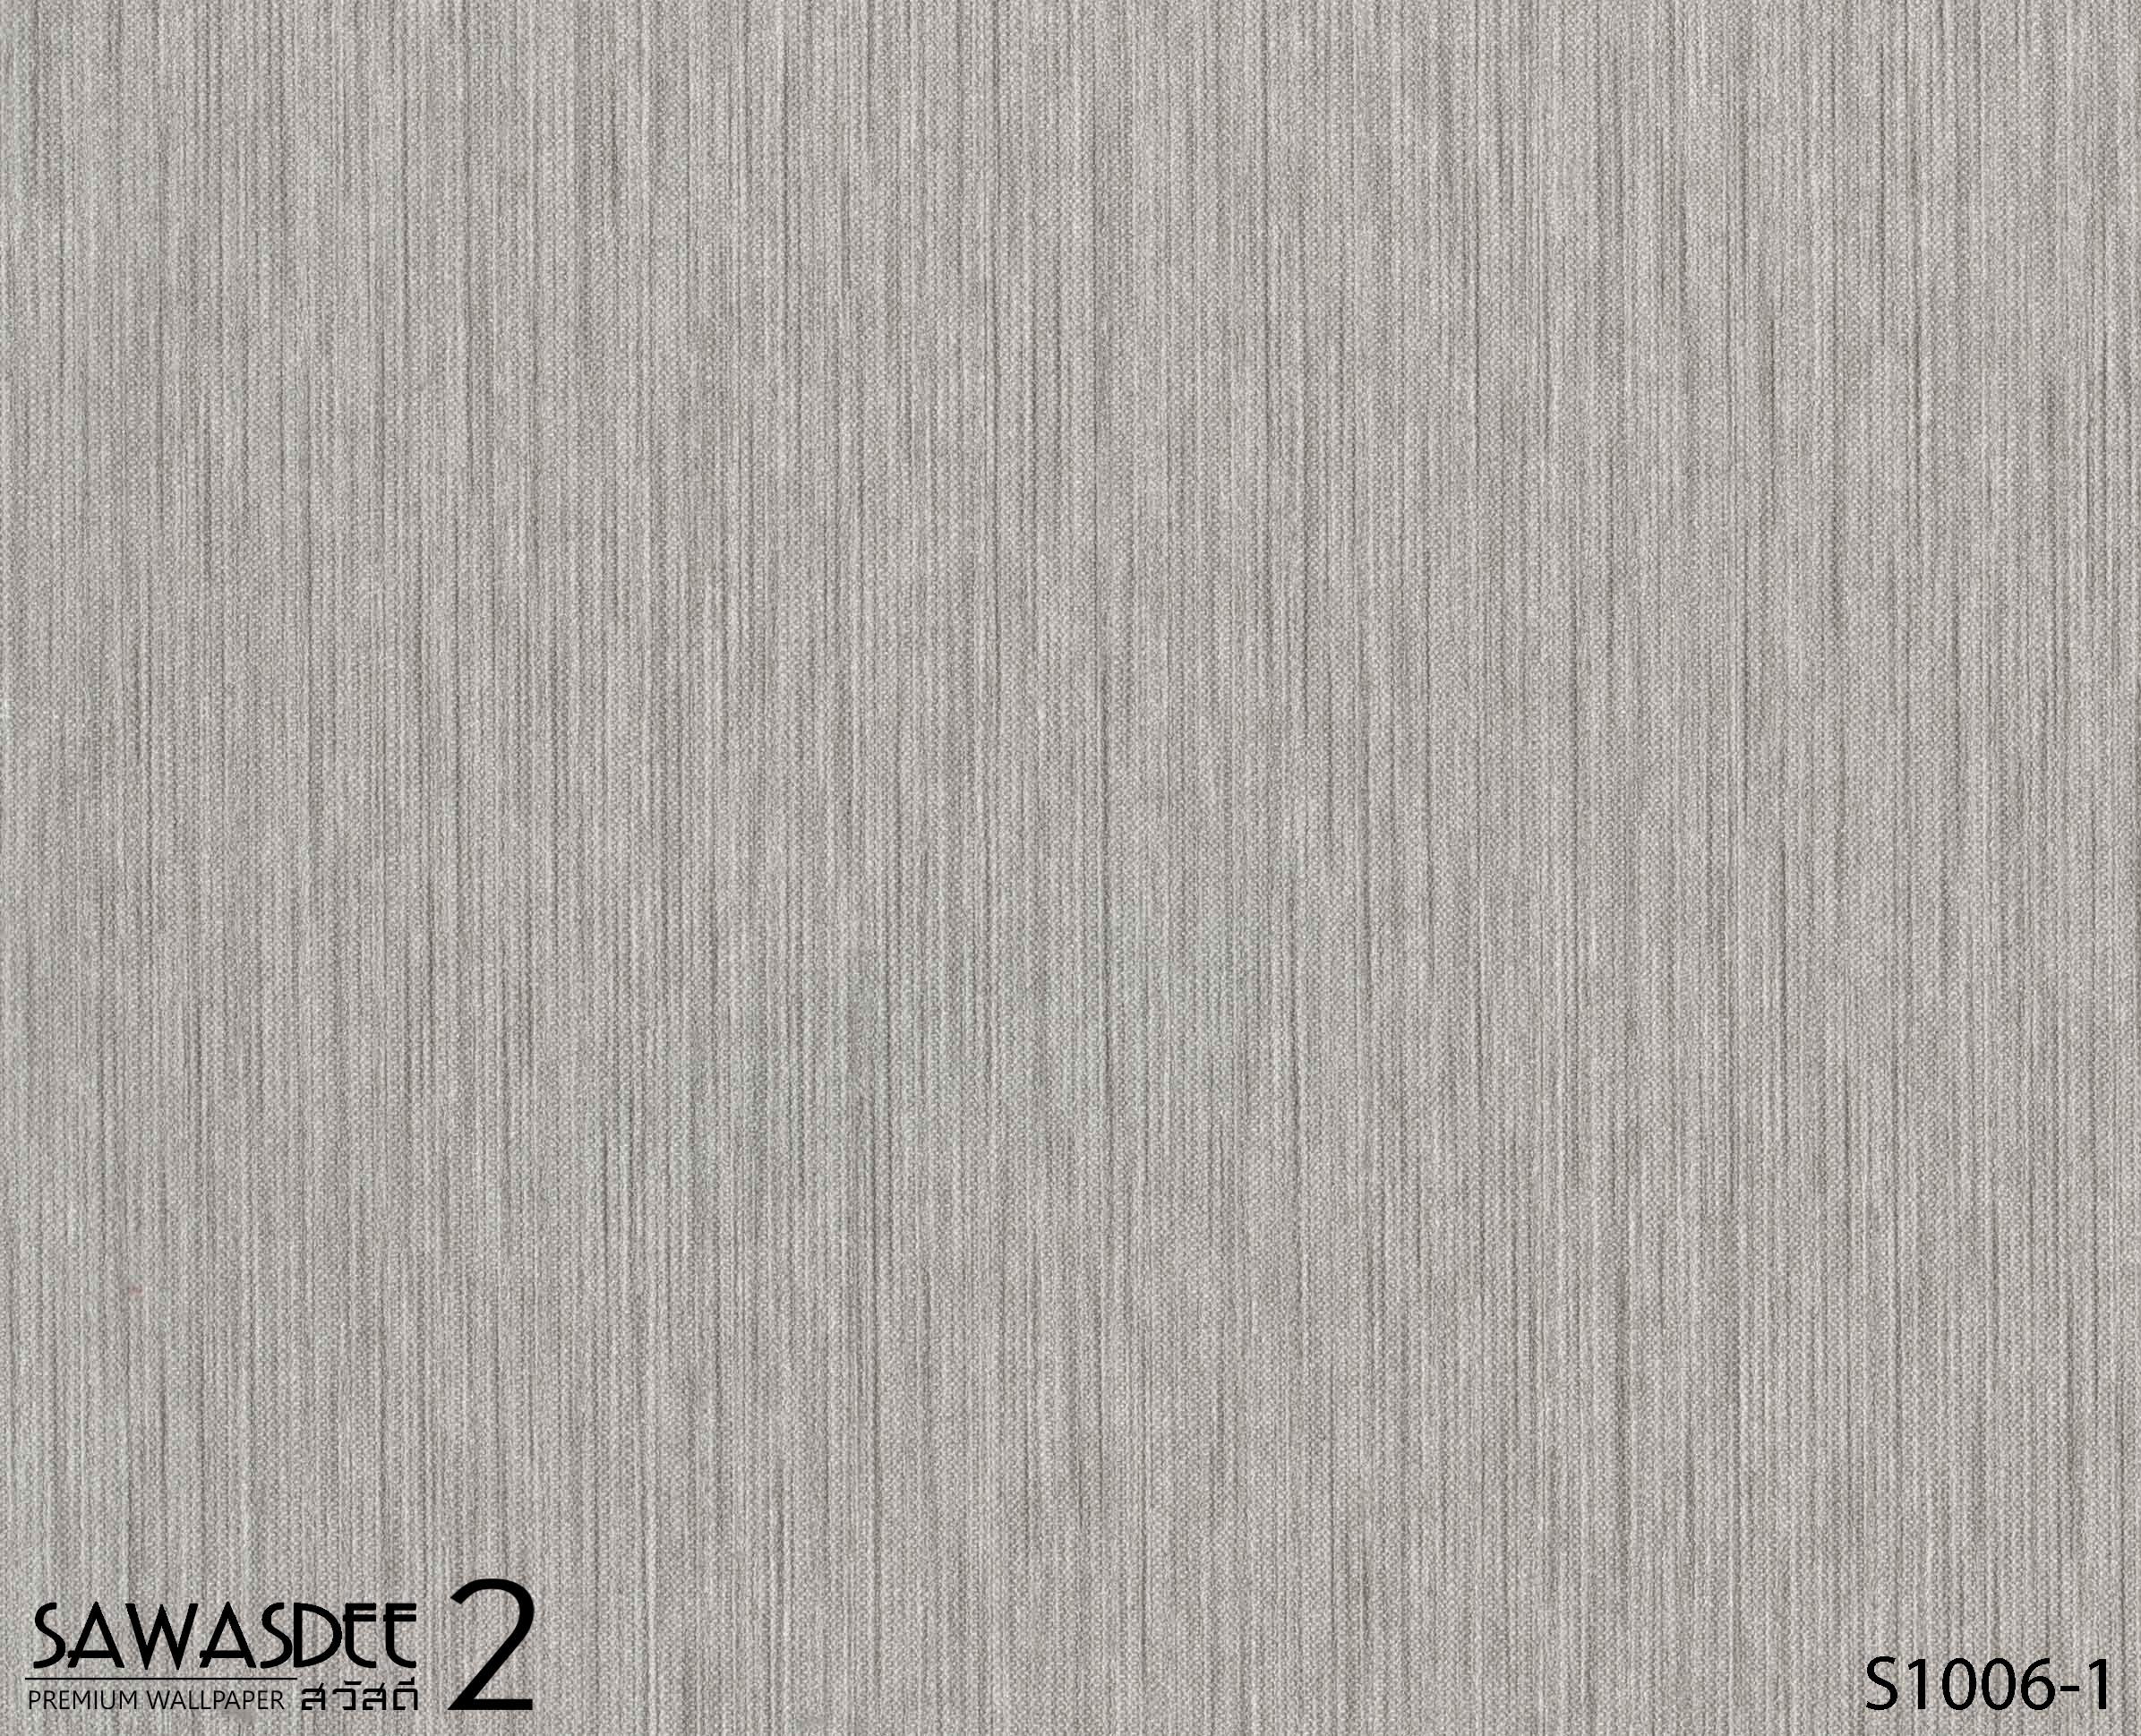 Wallpaper (SAWASDEE 2) S1006-1